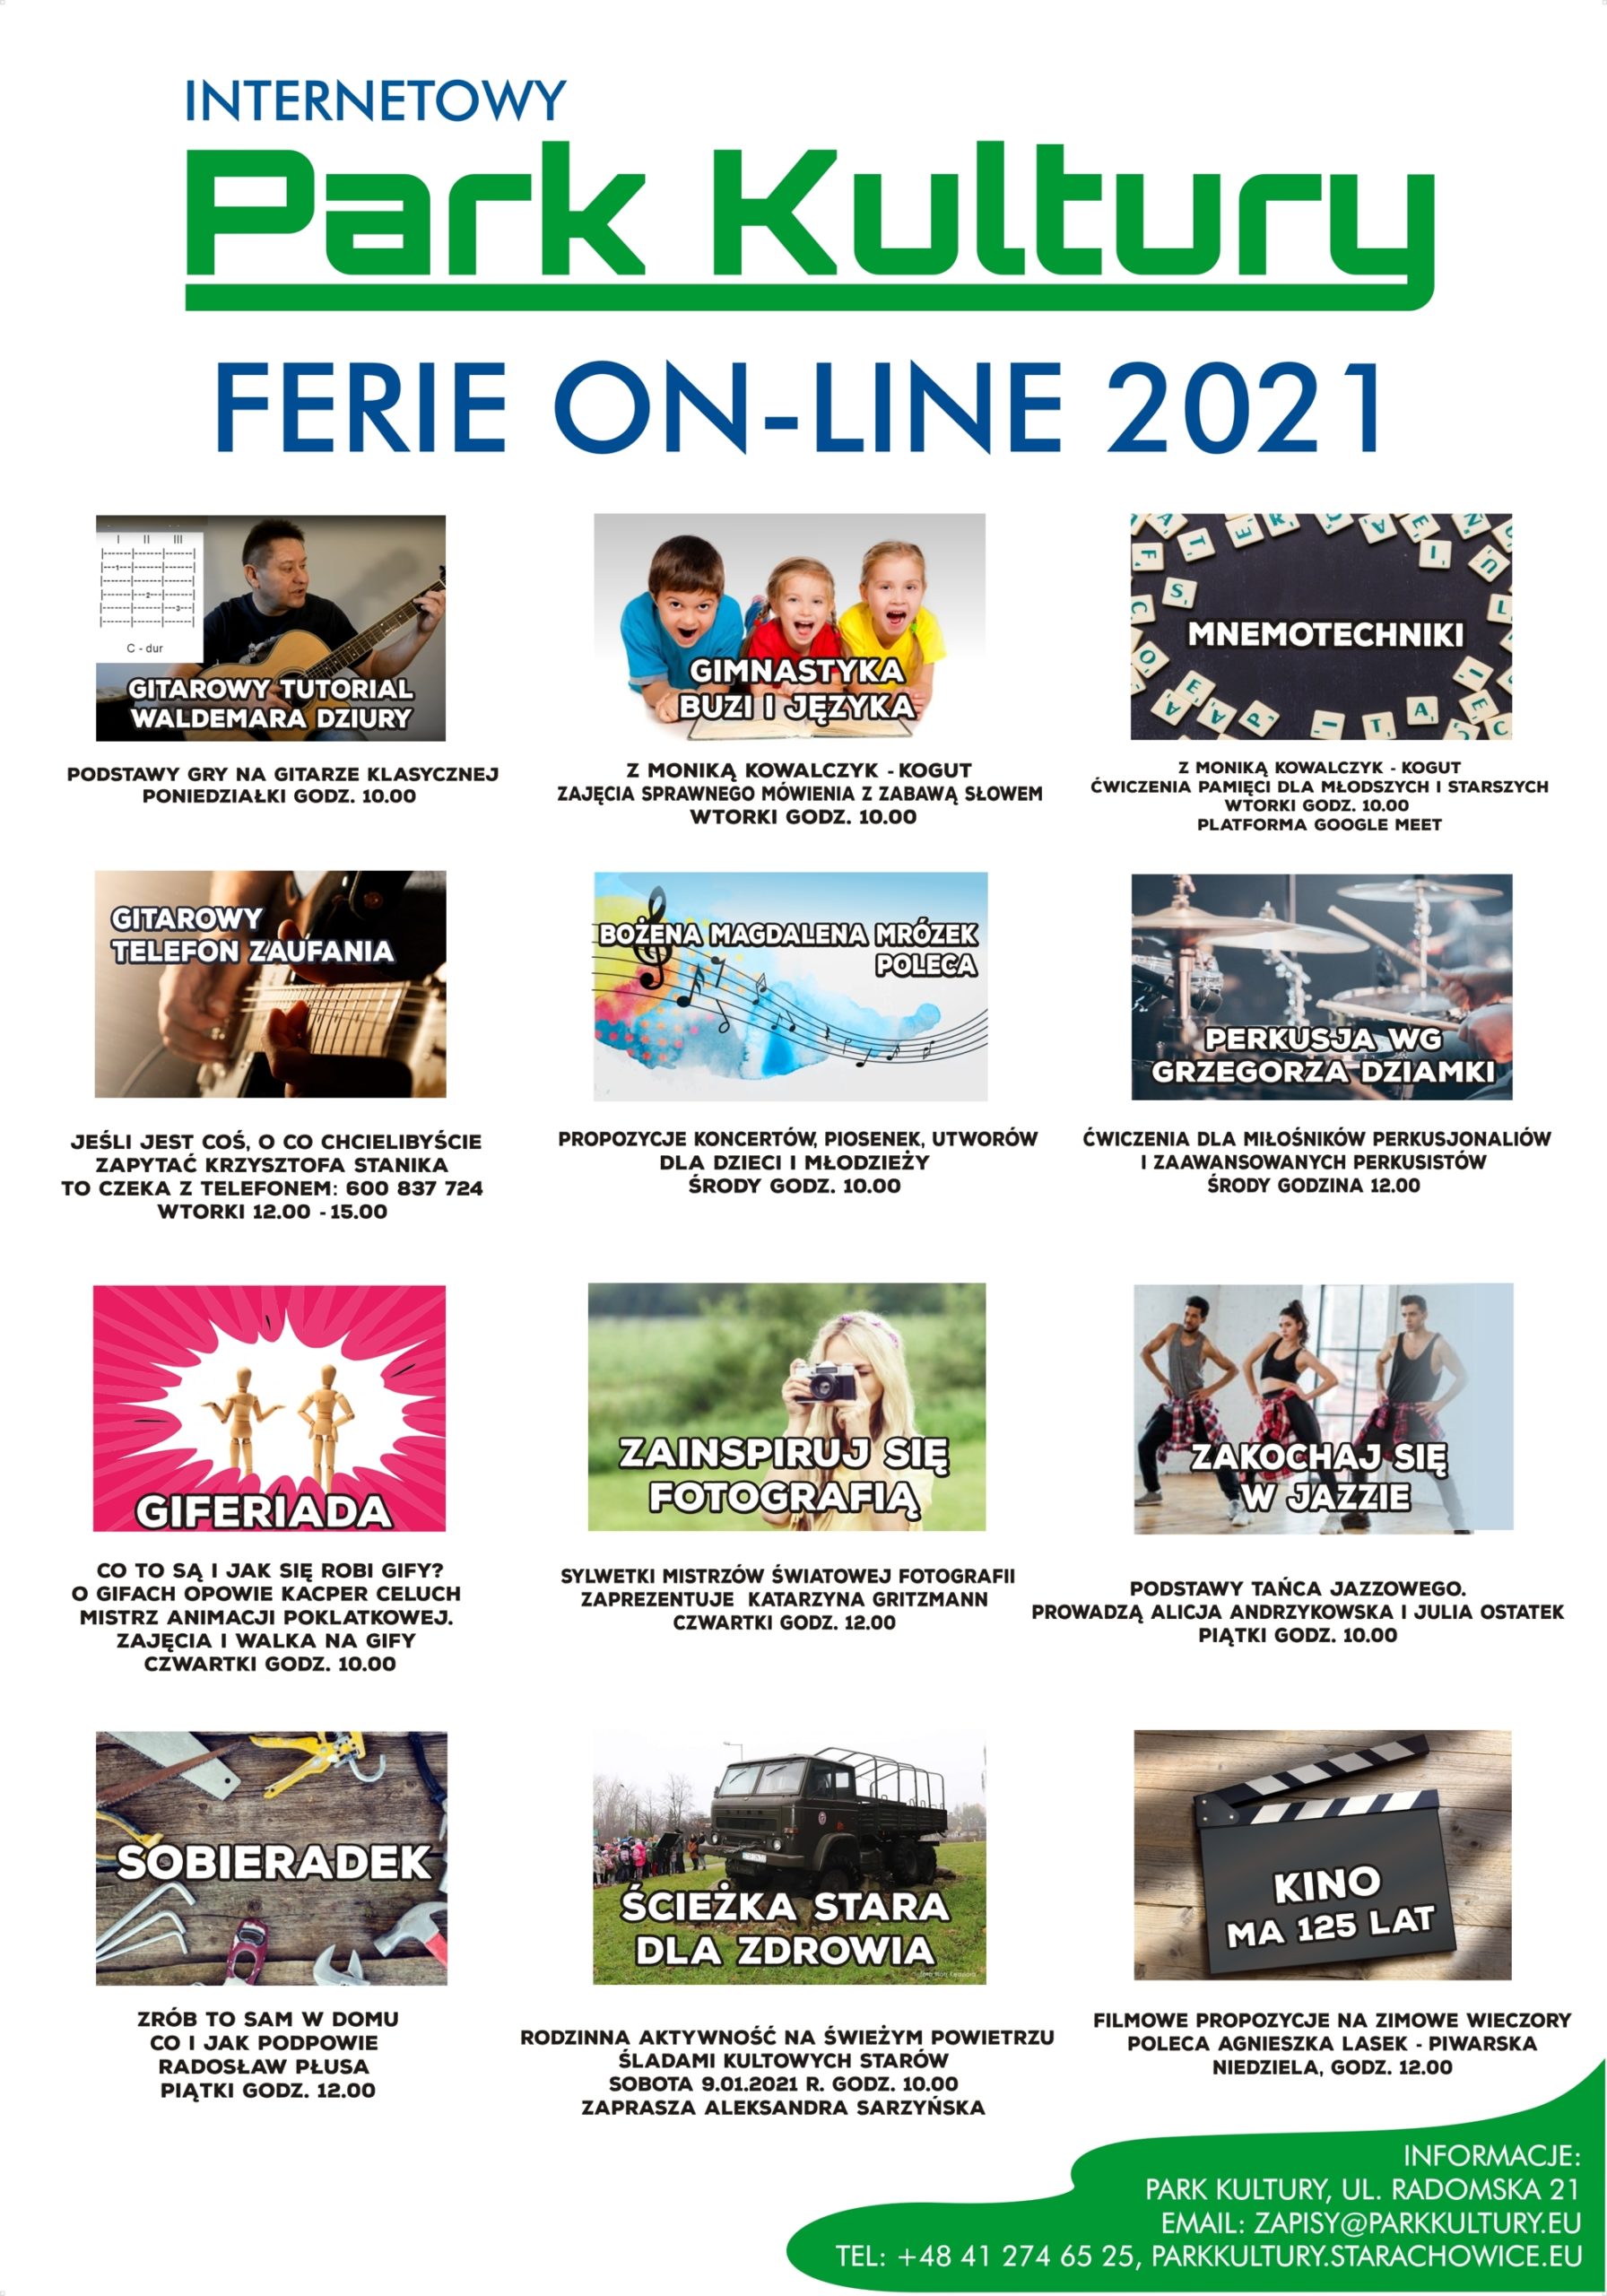 Ferie on-line 2021!